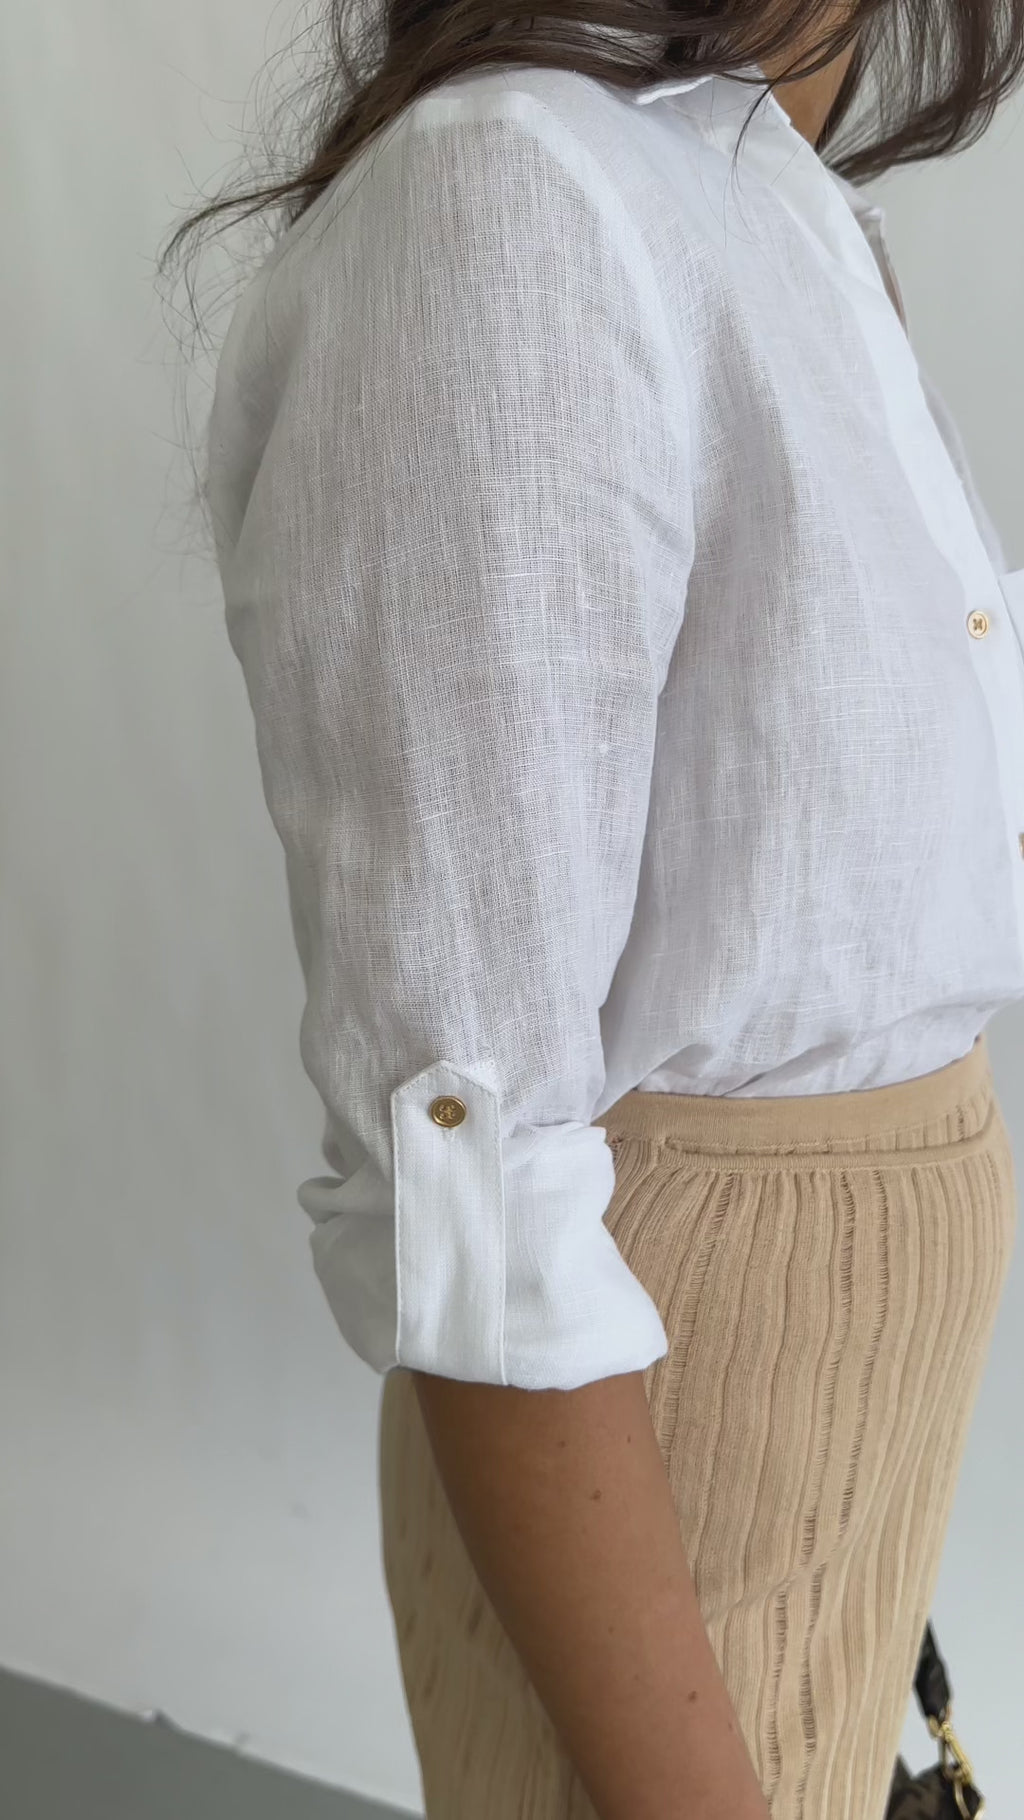 Linen Button Down Shirt - White